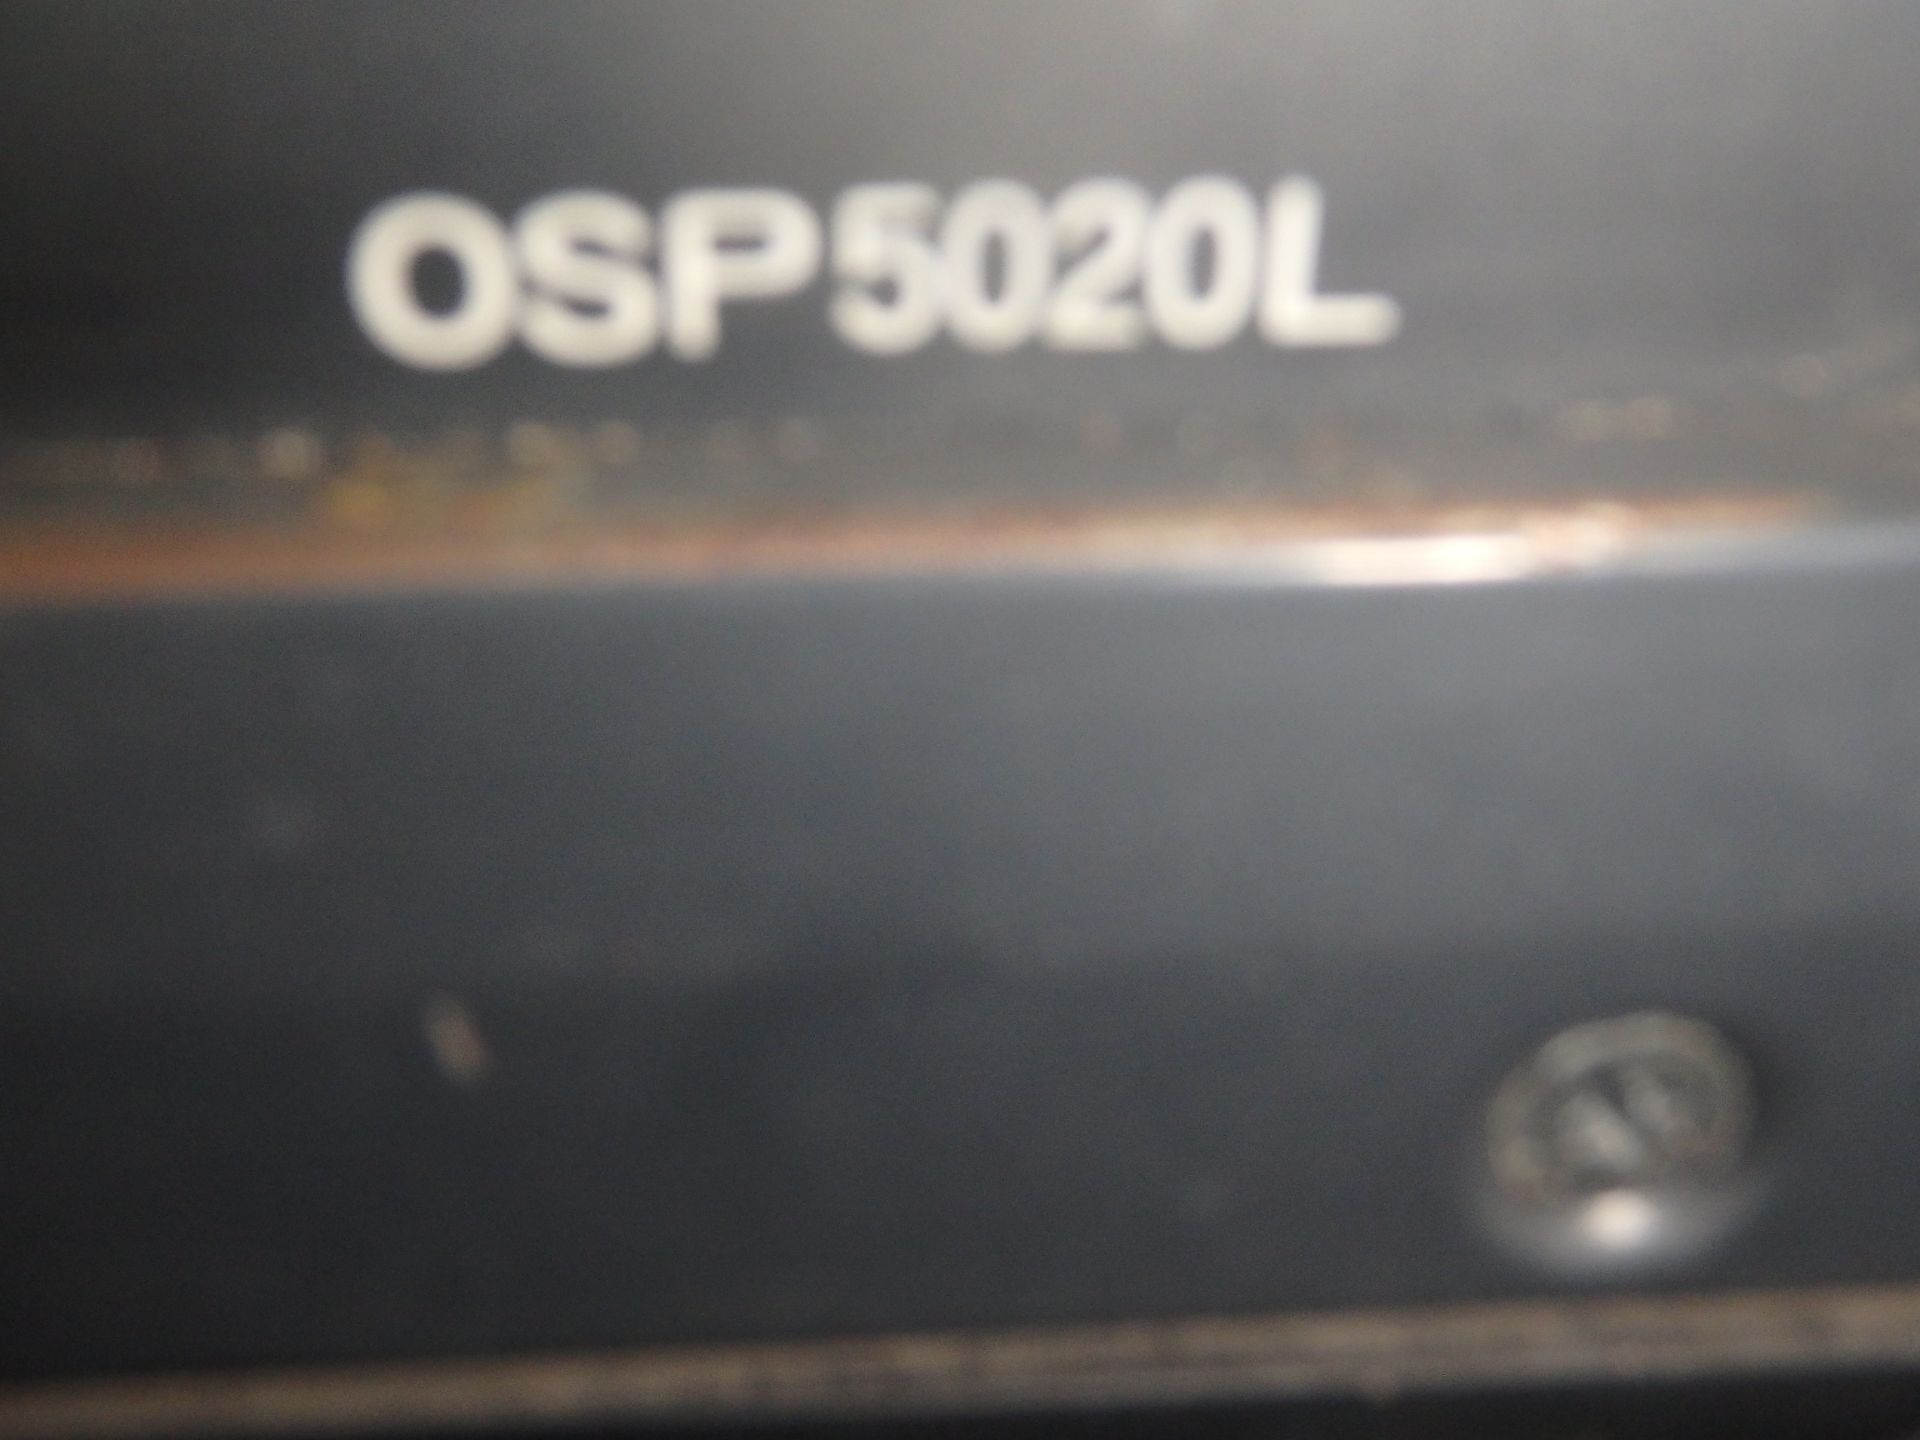 Okuma LU45 CNC Lathe, 5020L CNC Control - Image 11 of 12